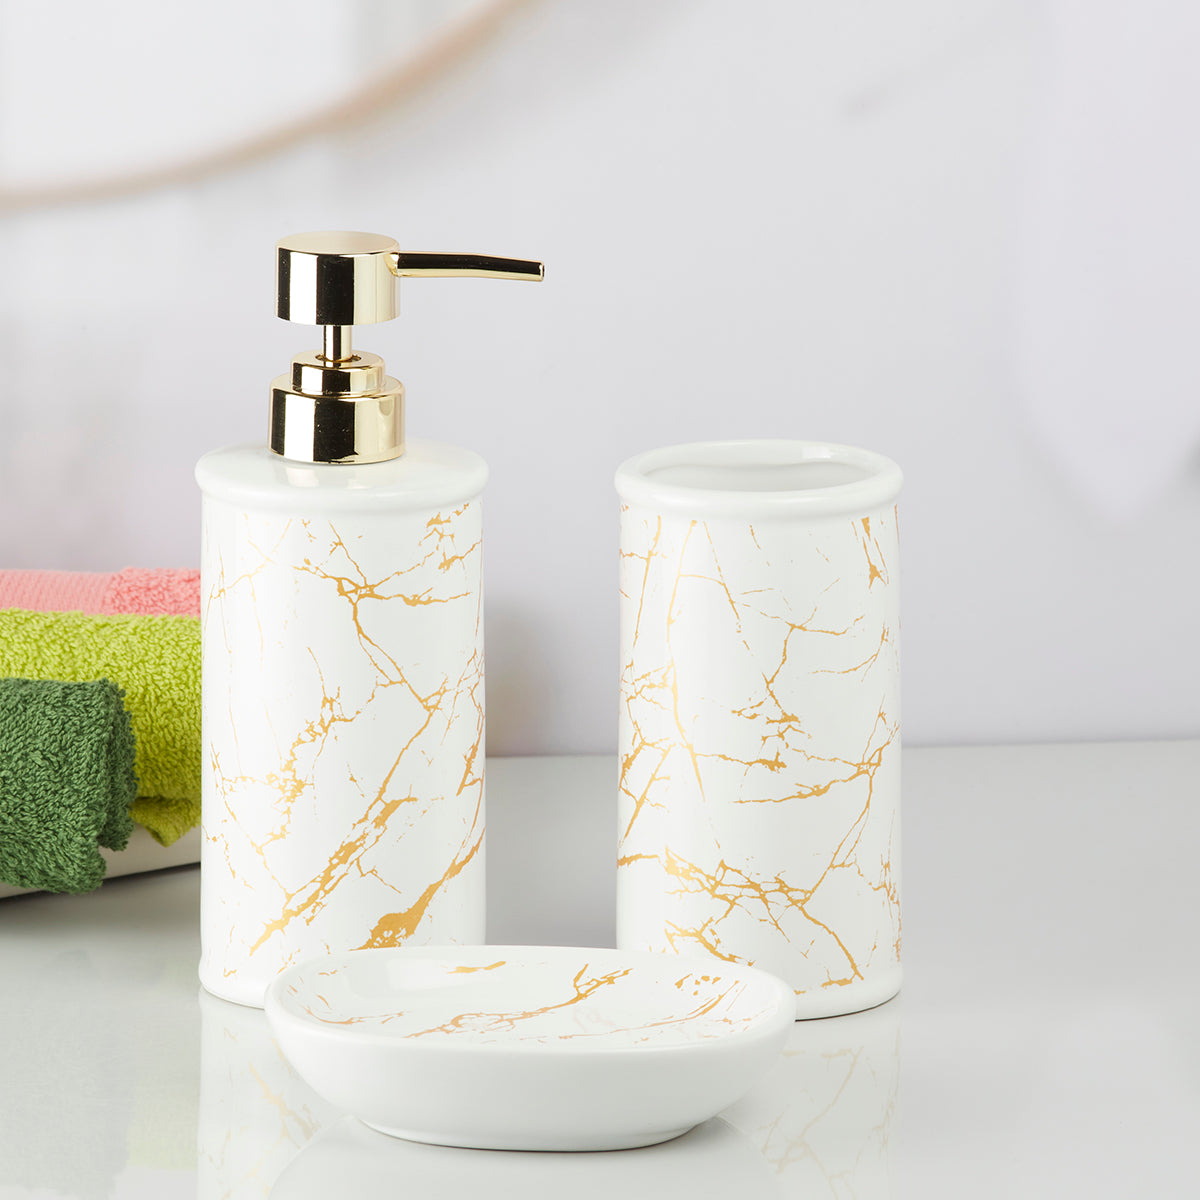 Ceramic Bathroom Accessories Set of 3 Bath Set with Soap Dispenser (9729)